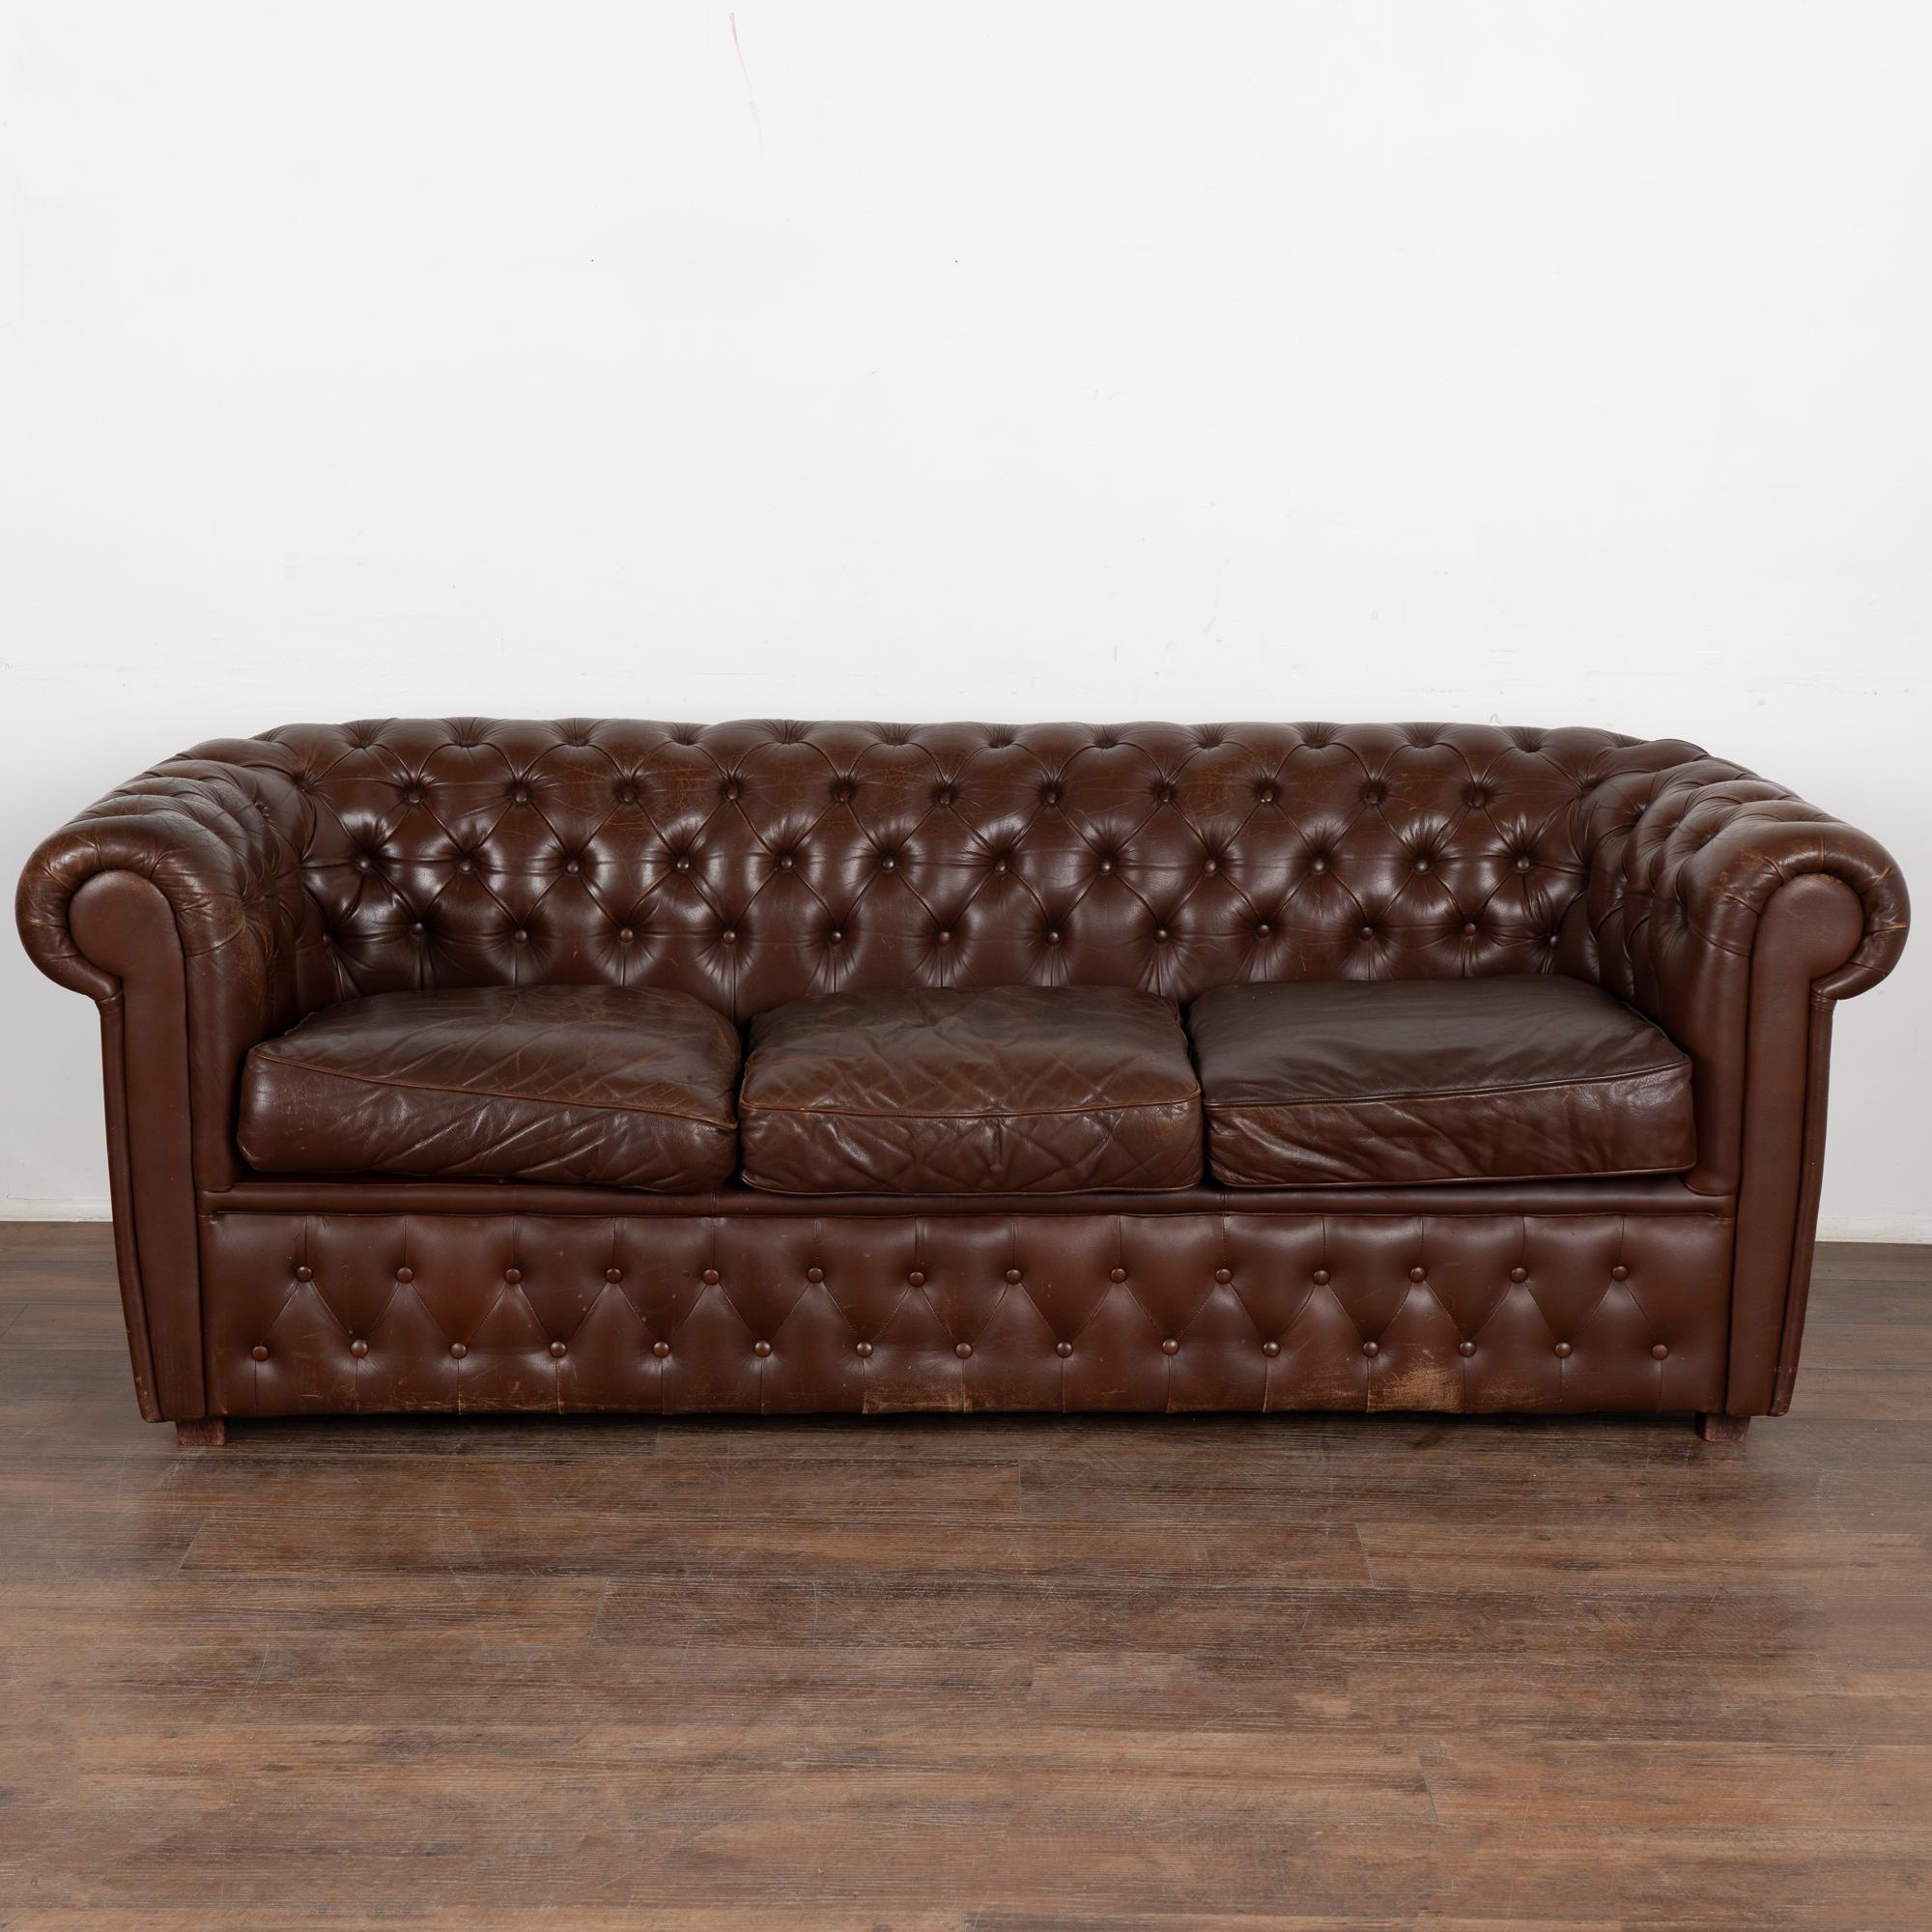 Chesterfield Style Brown Leder 3 Sitz Sofa & 2 Club Stühle, ca. 1920-40 (20. Jahrhundert) im Angebot